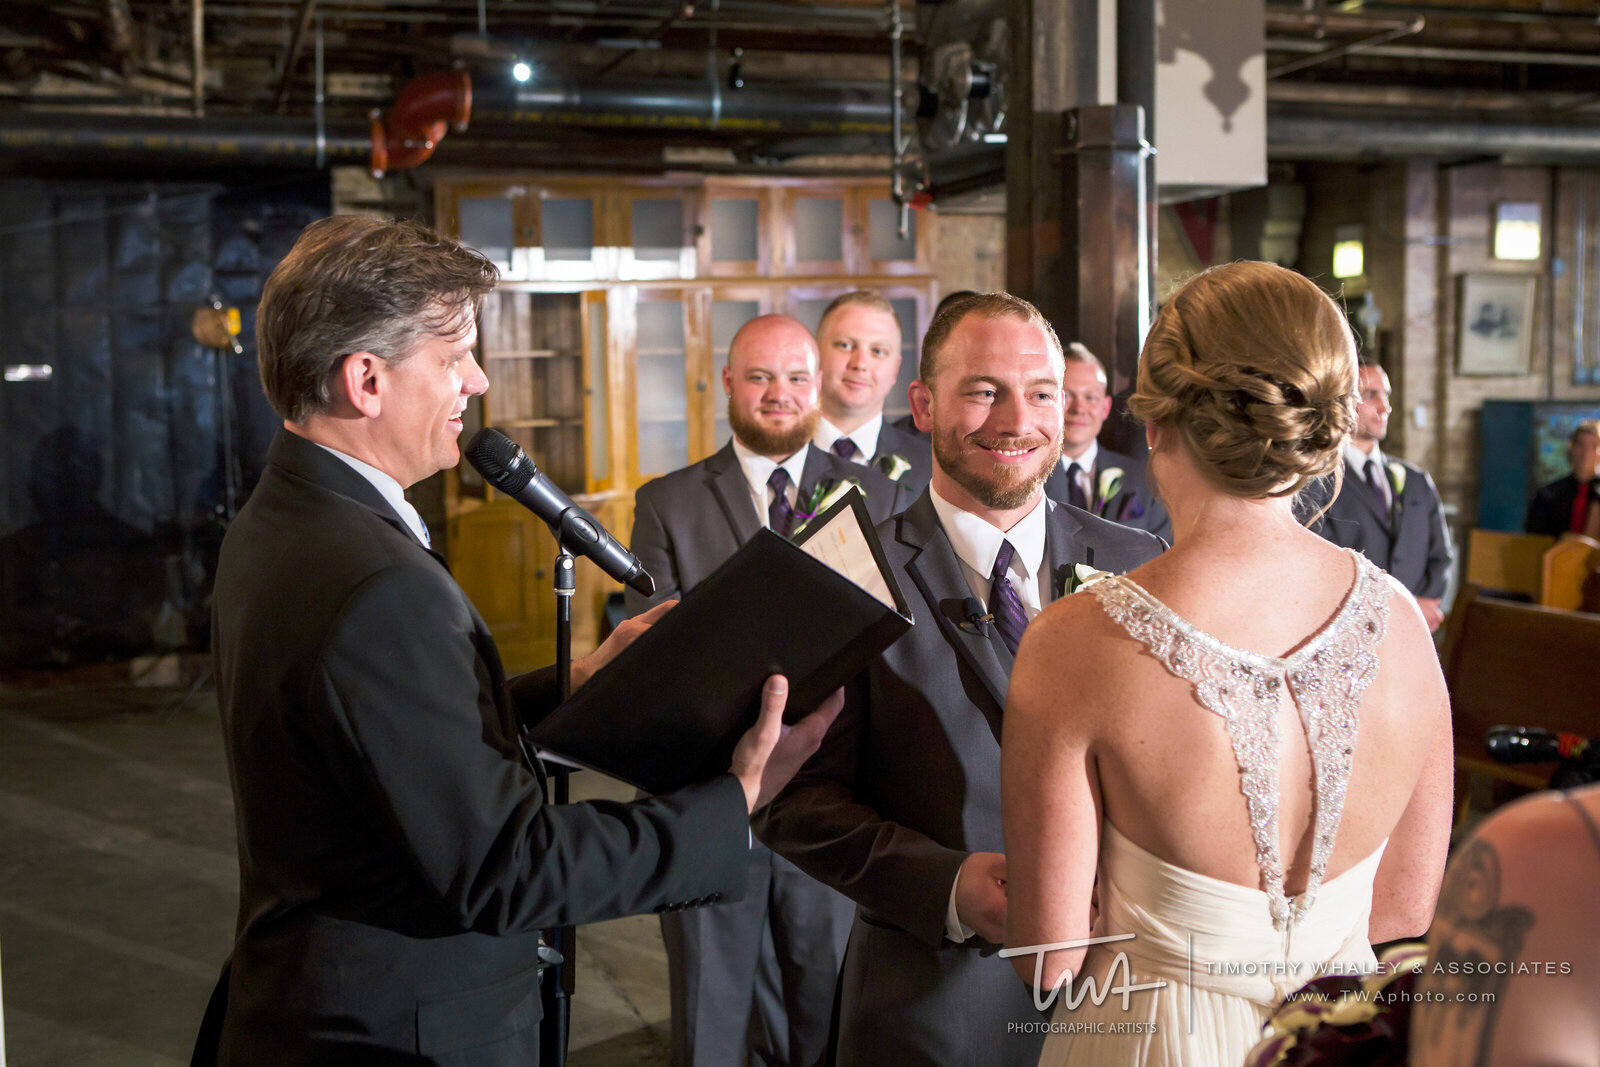 Groom smiles while taking his wedding vows